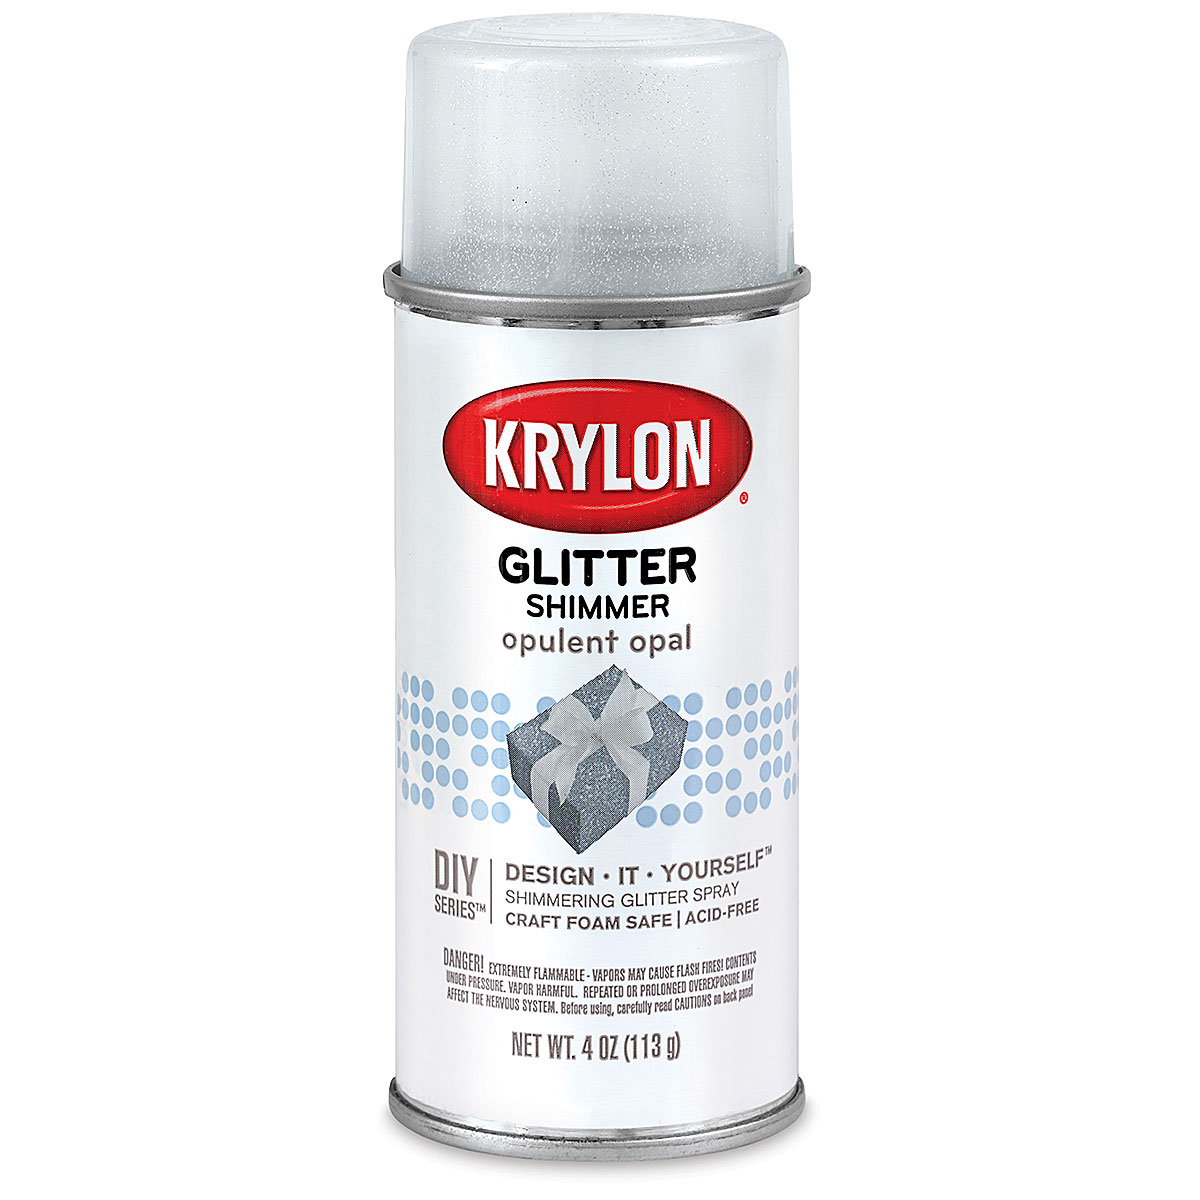 Glitter Spray Design Master Silver